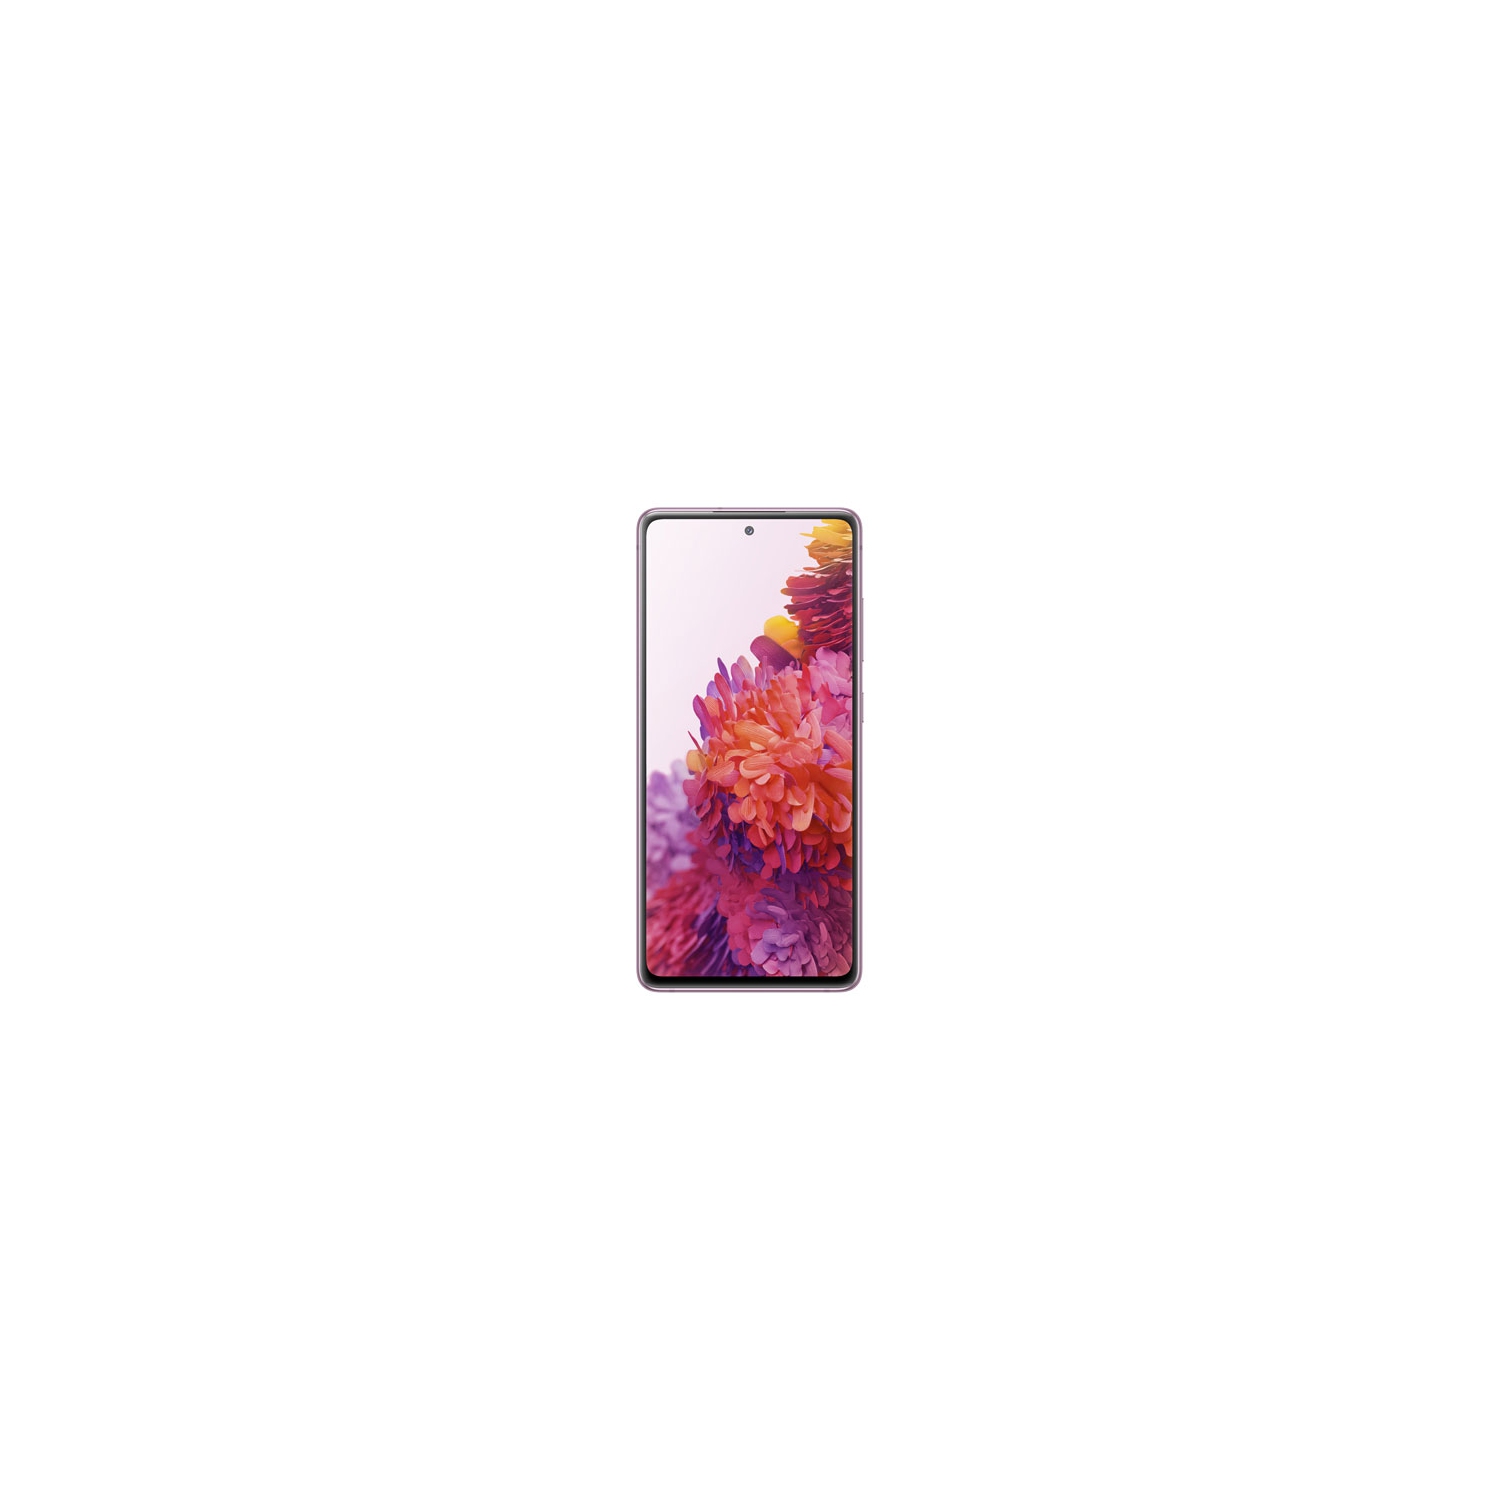 Refurbished (Fair) - Samsung Galaxy S20 FE 5G 128GB Smartphone - Cloud Lavender - Unlocked